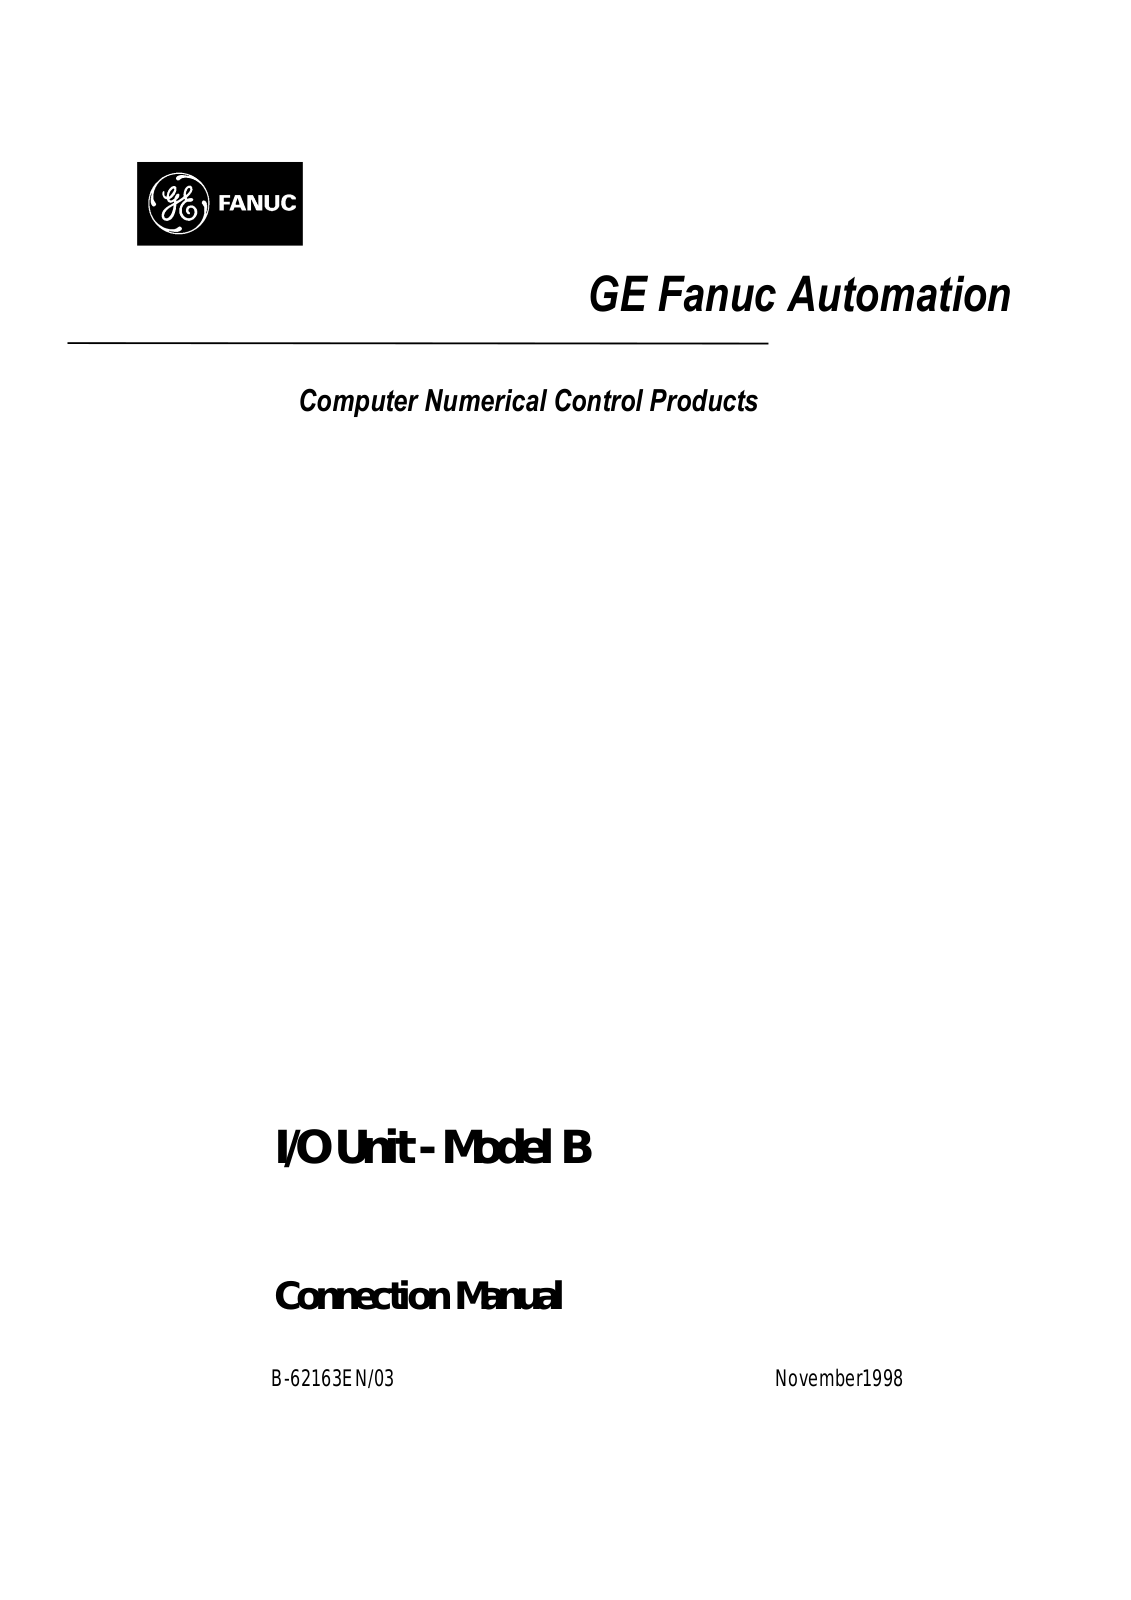 fanuc IO - B Connection Manual